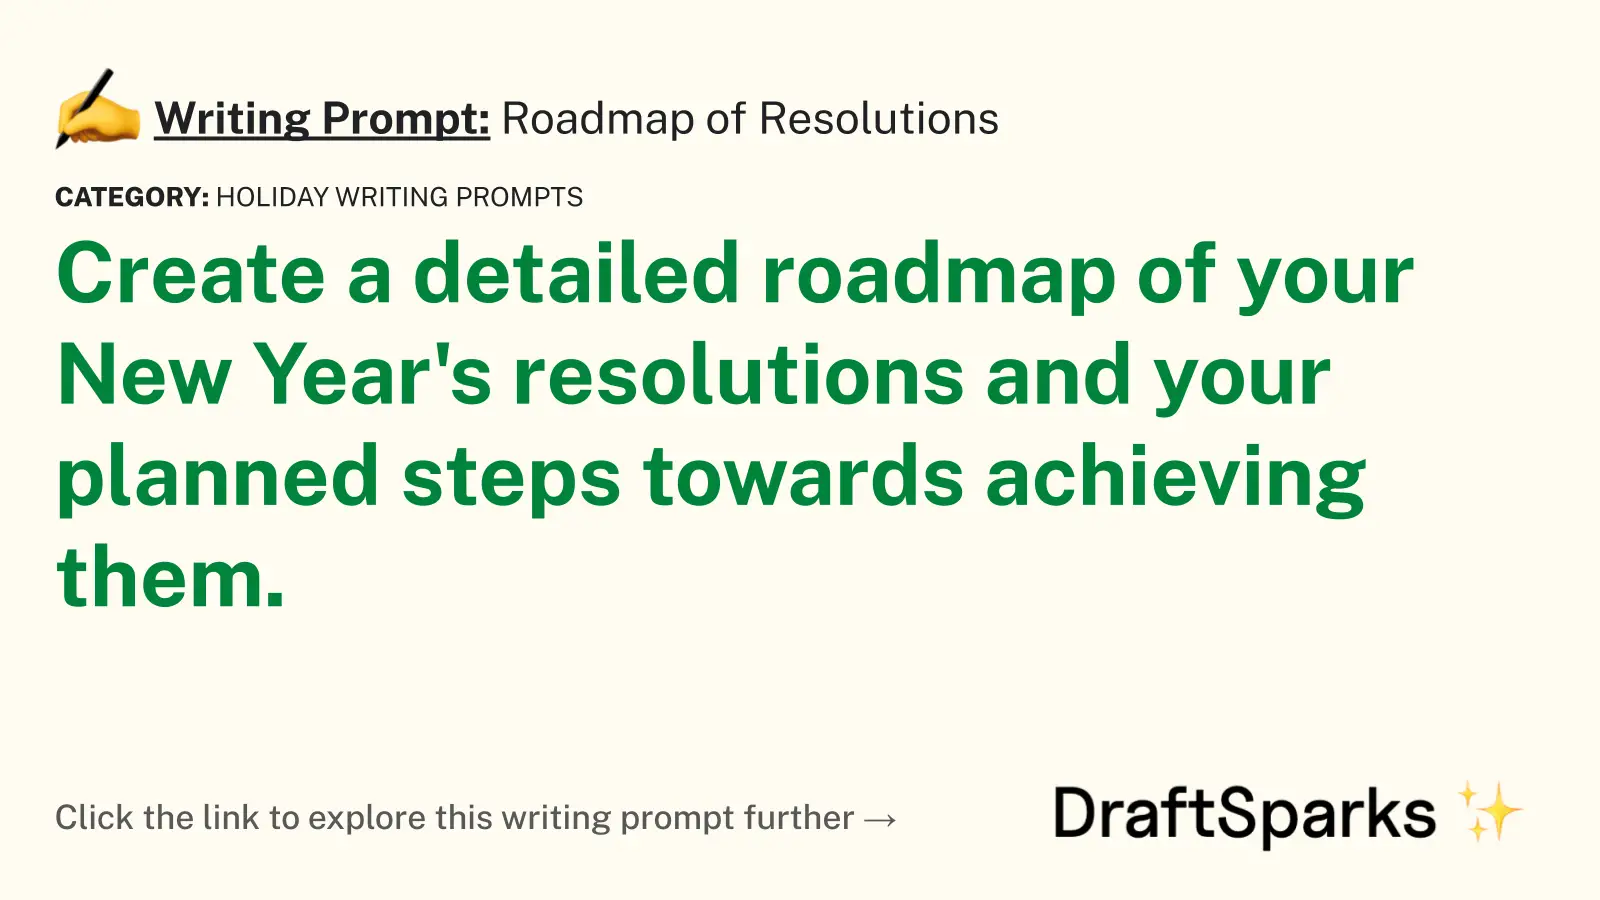 Roadmap of Resolutions